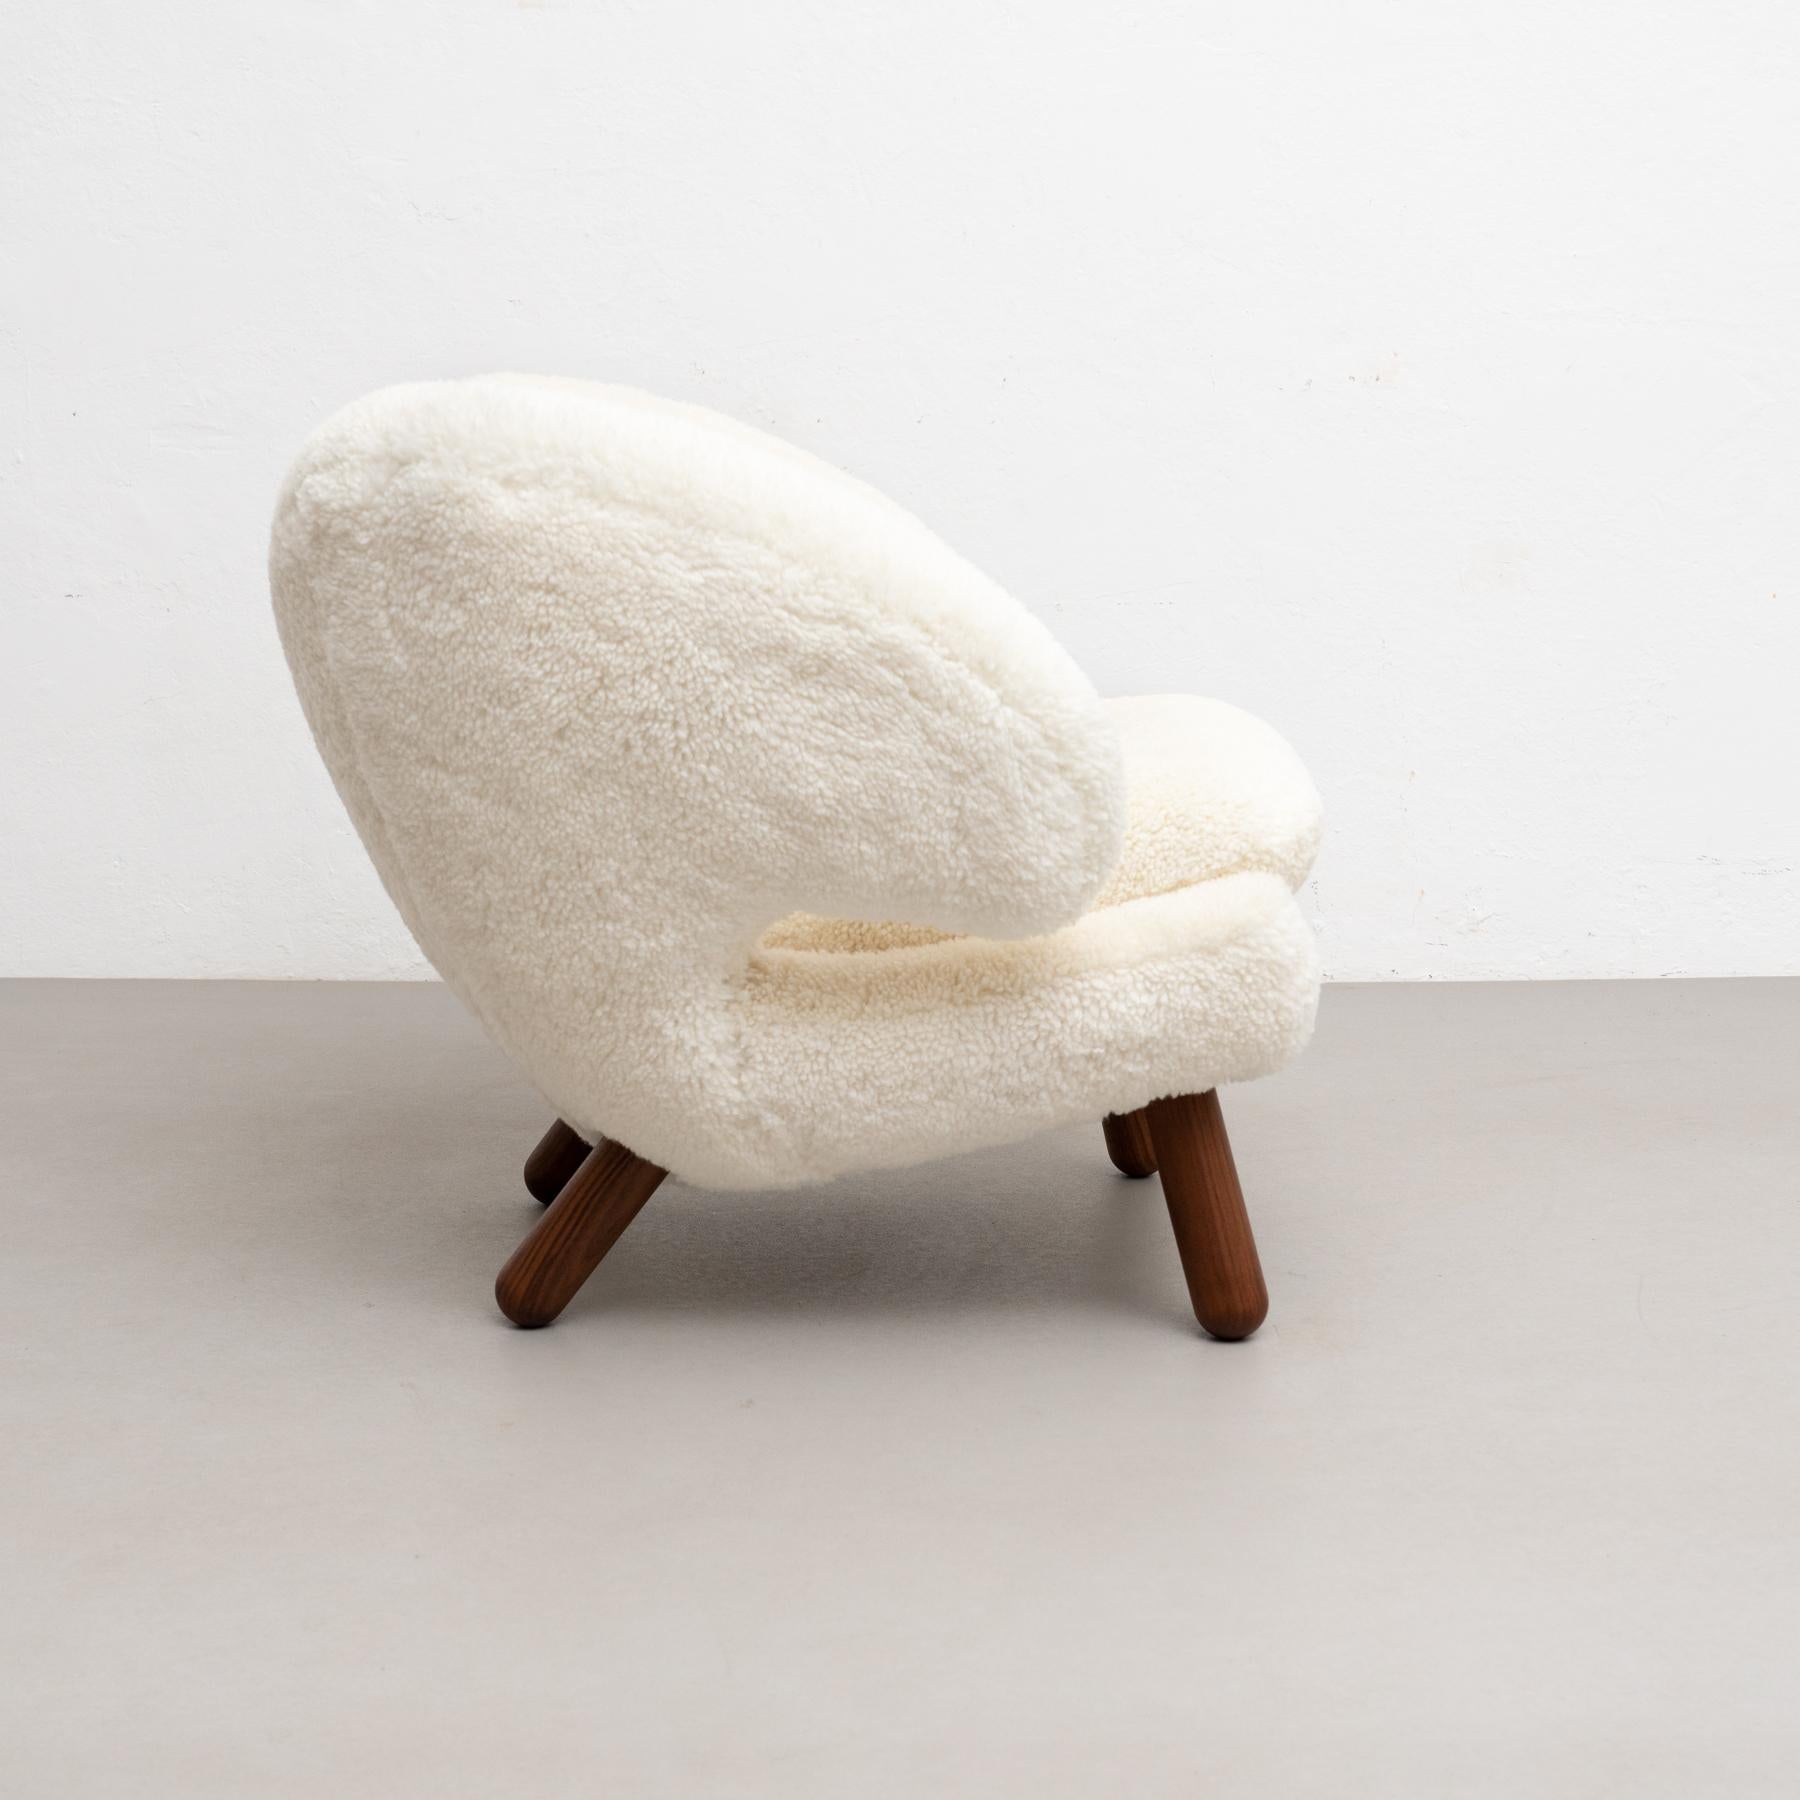 Danois Finn Juhl Pelican Chair Upholstered in Offwhite Sheepskin (Chaise Pélican recouverte de peau de mouton blanc cassé) en vente